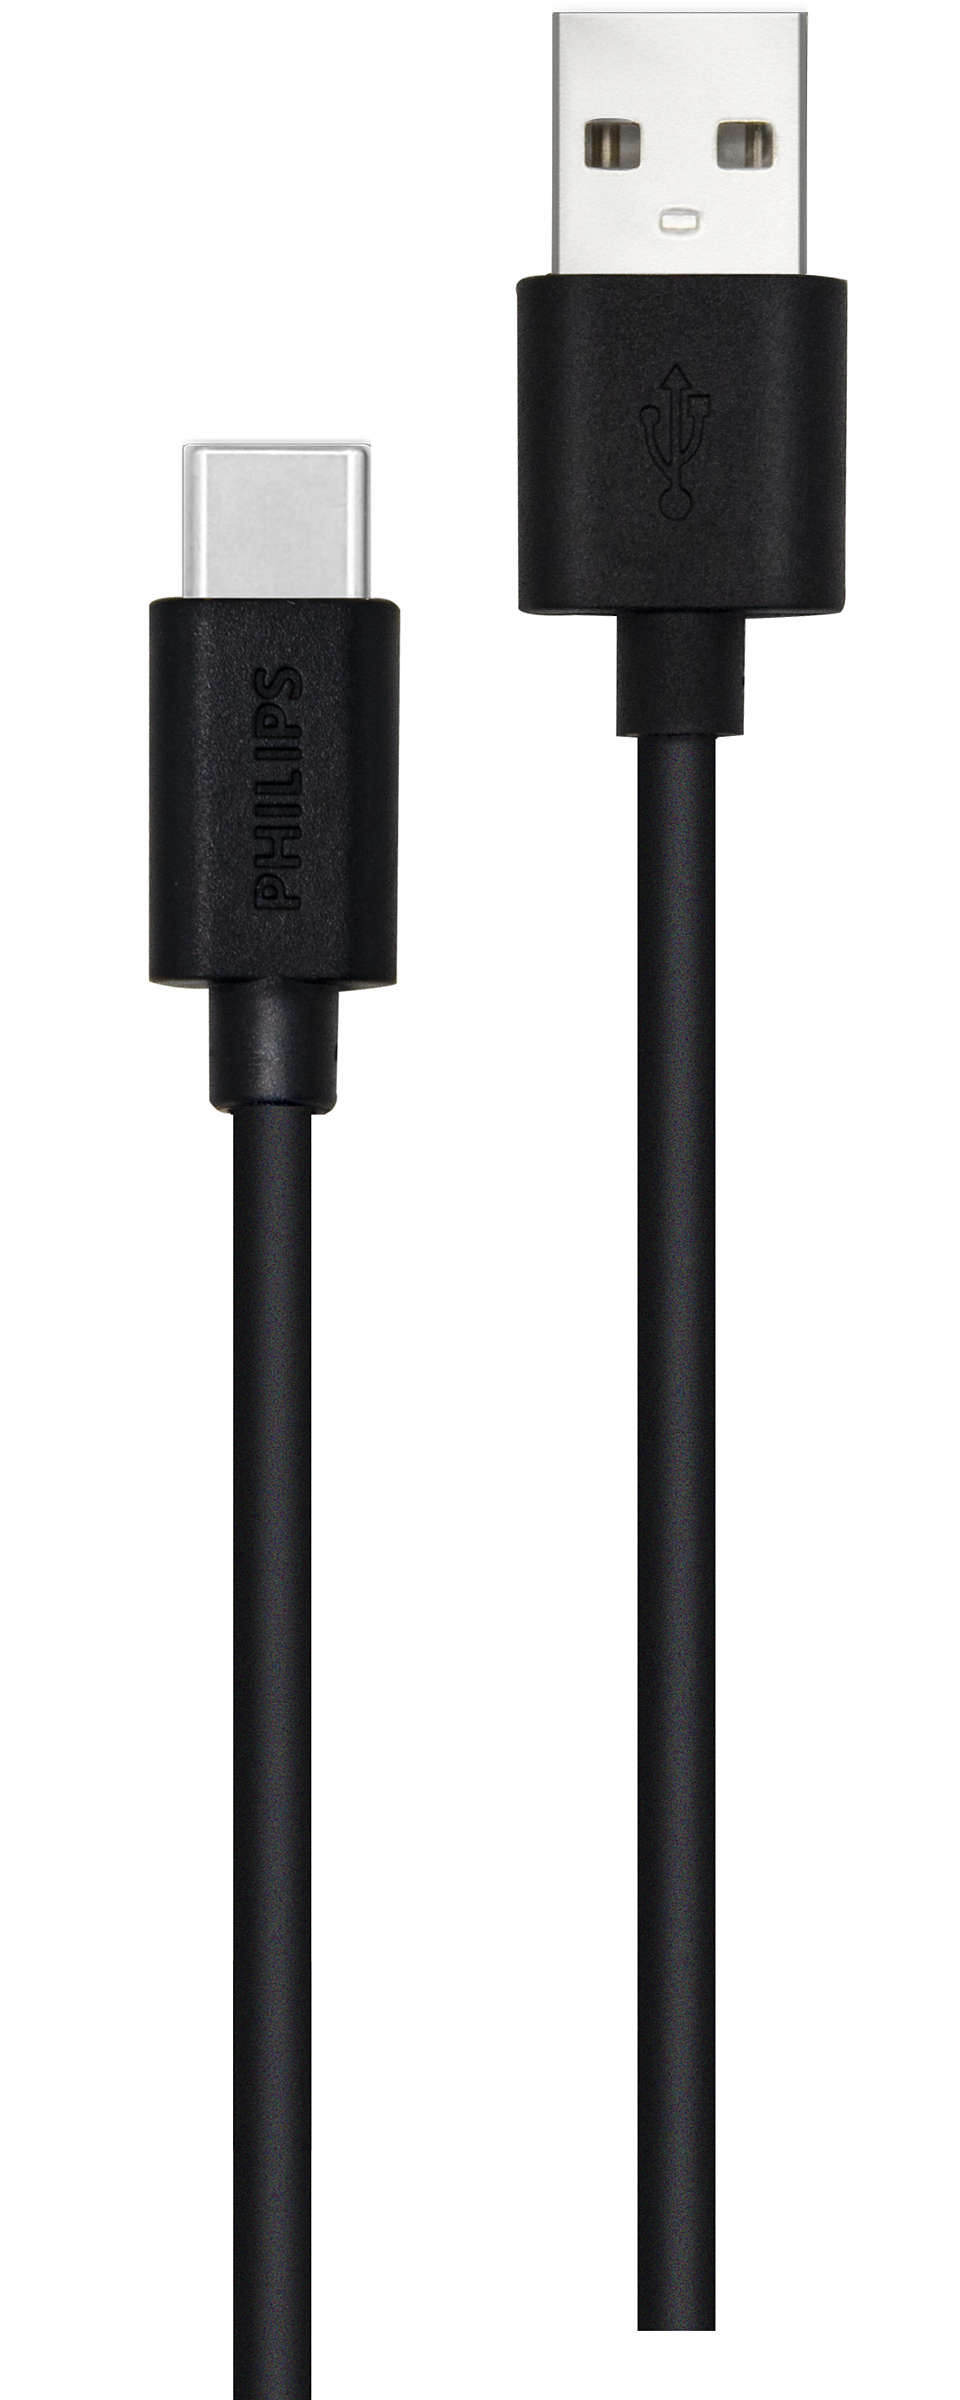 1,2 m USB-A - USB-C kablosu